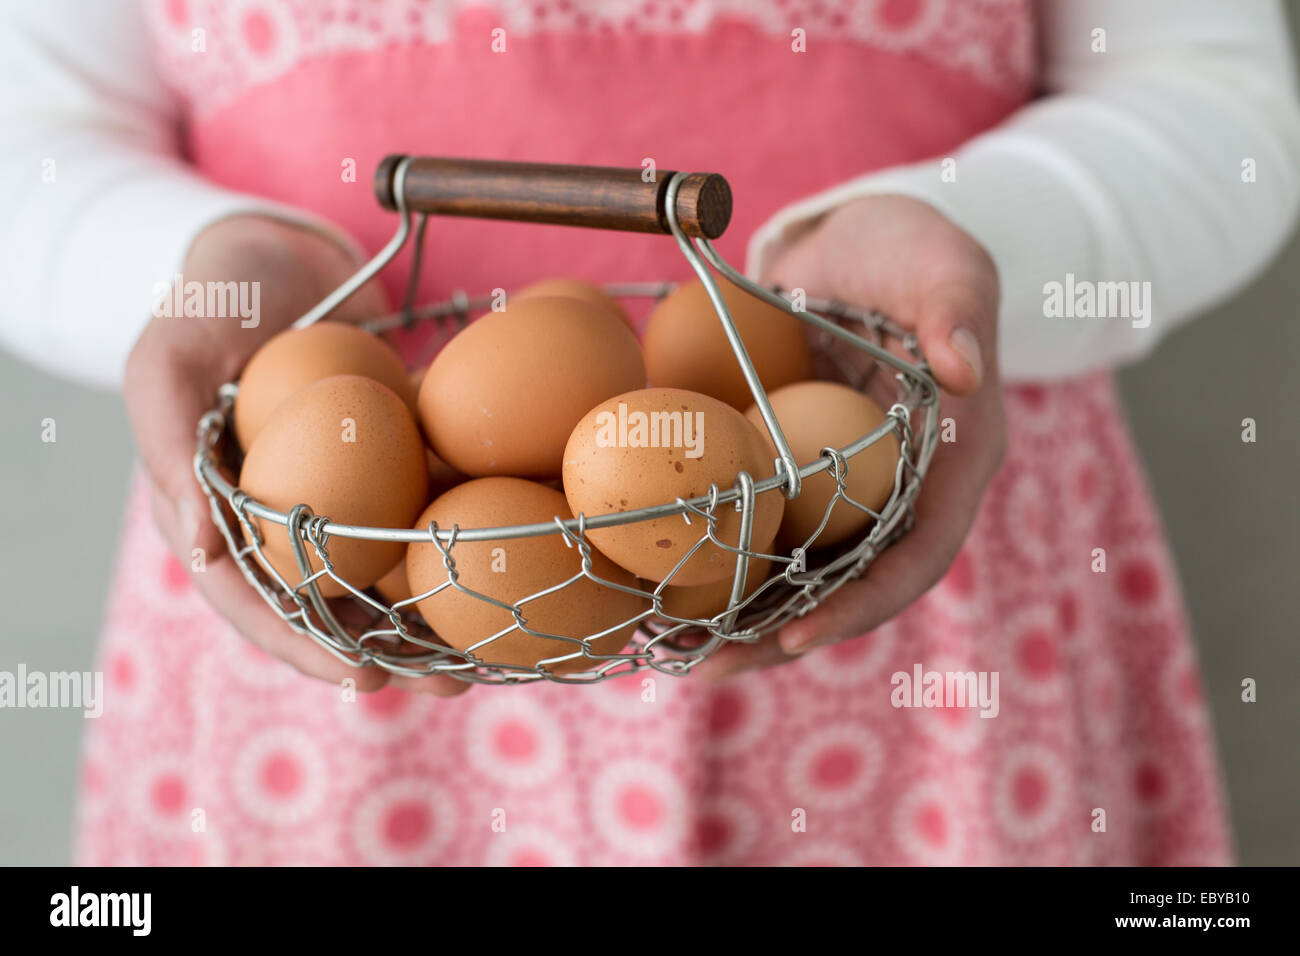 Organic brown eggs Stock Photo